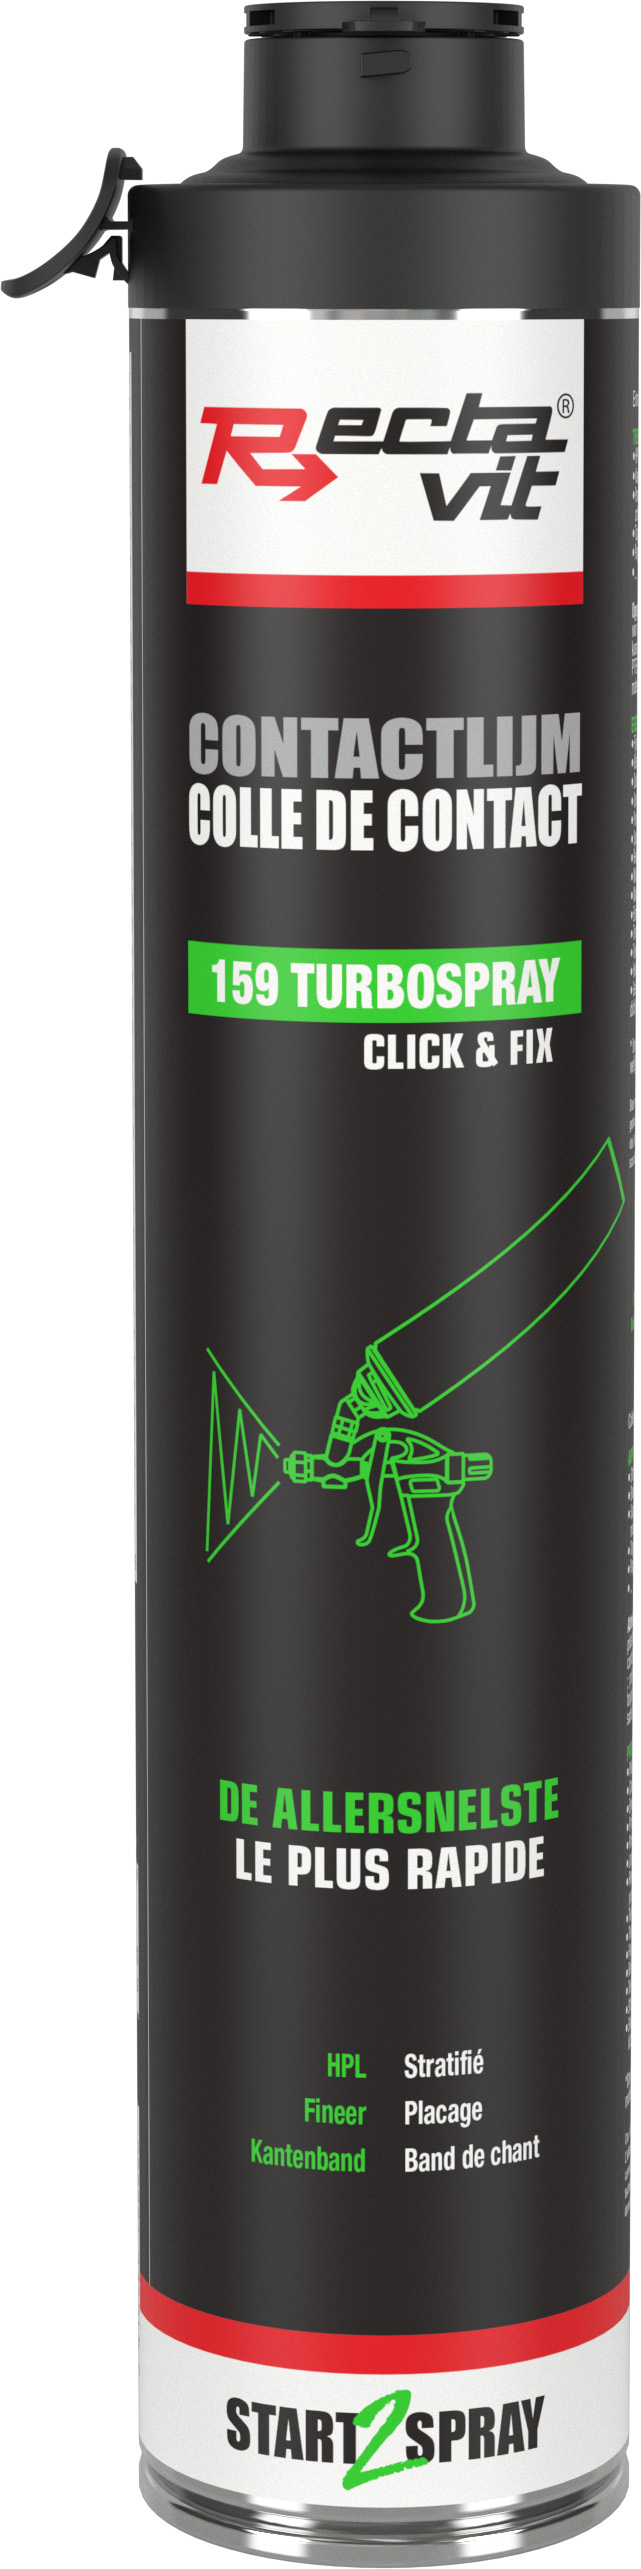 Rectavit 159 Turbospray Click & Fix 750ml